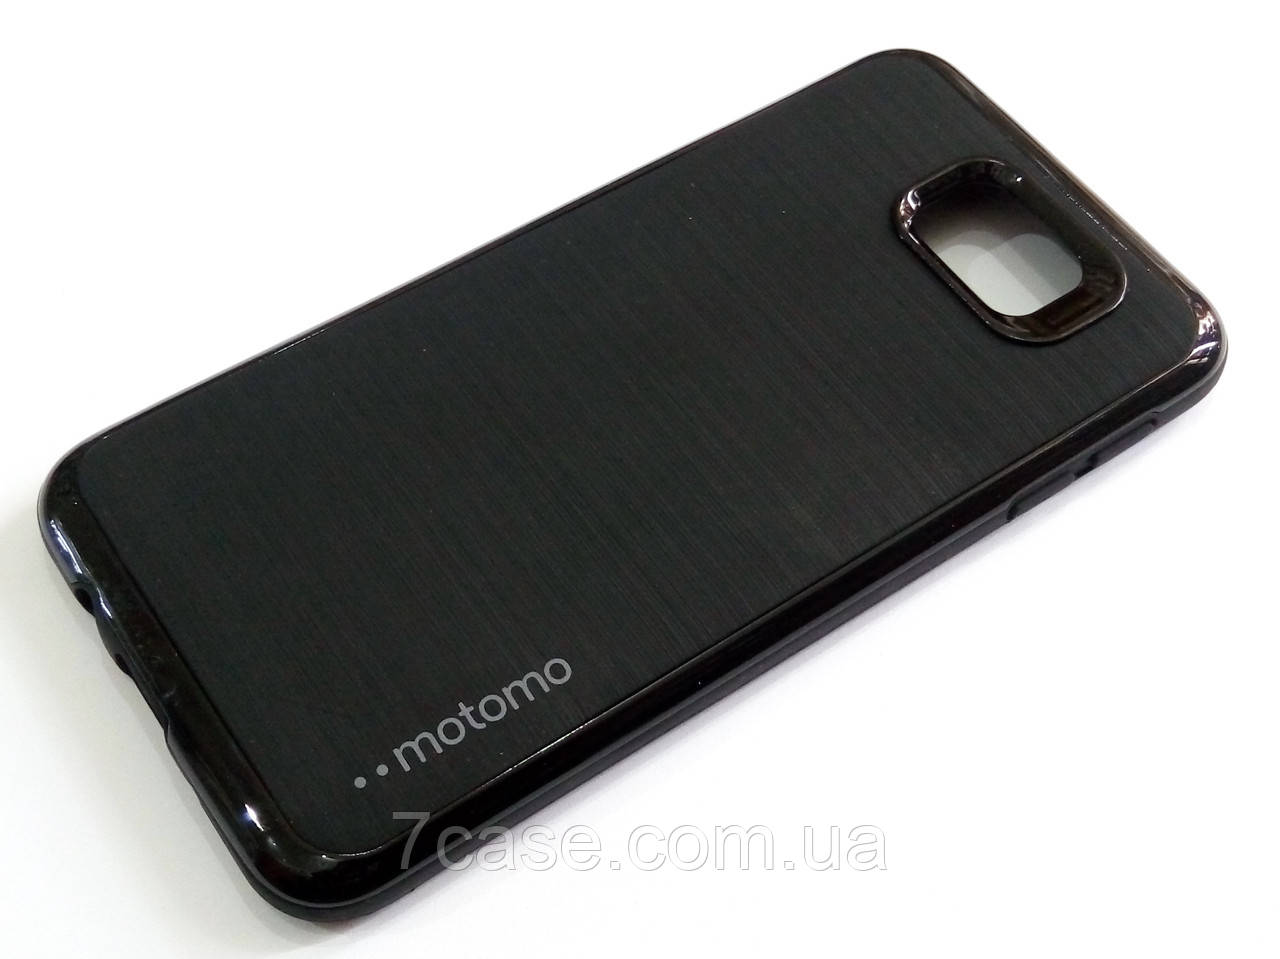 Чохол протиударний Motomo для Samsung Galaxy J5 Prime G570f чорний